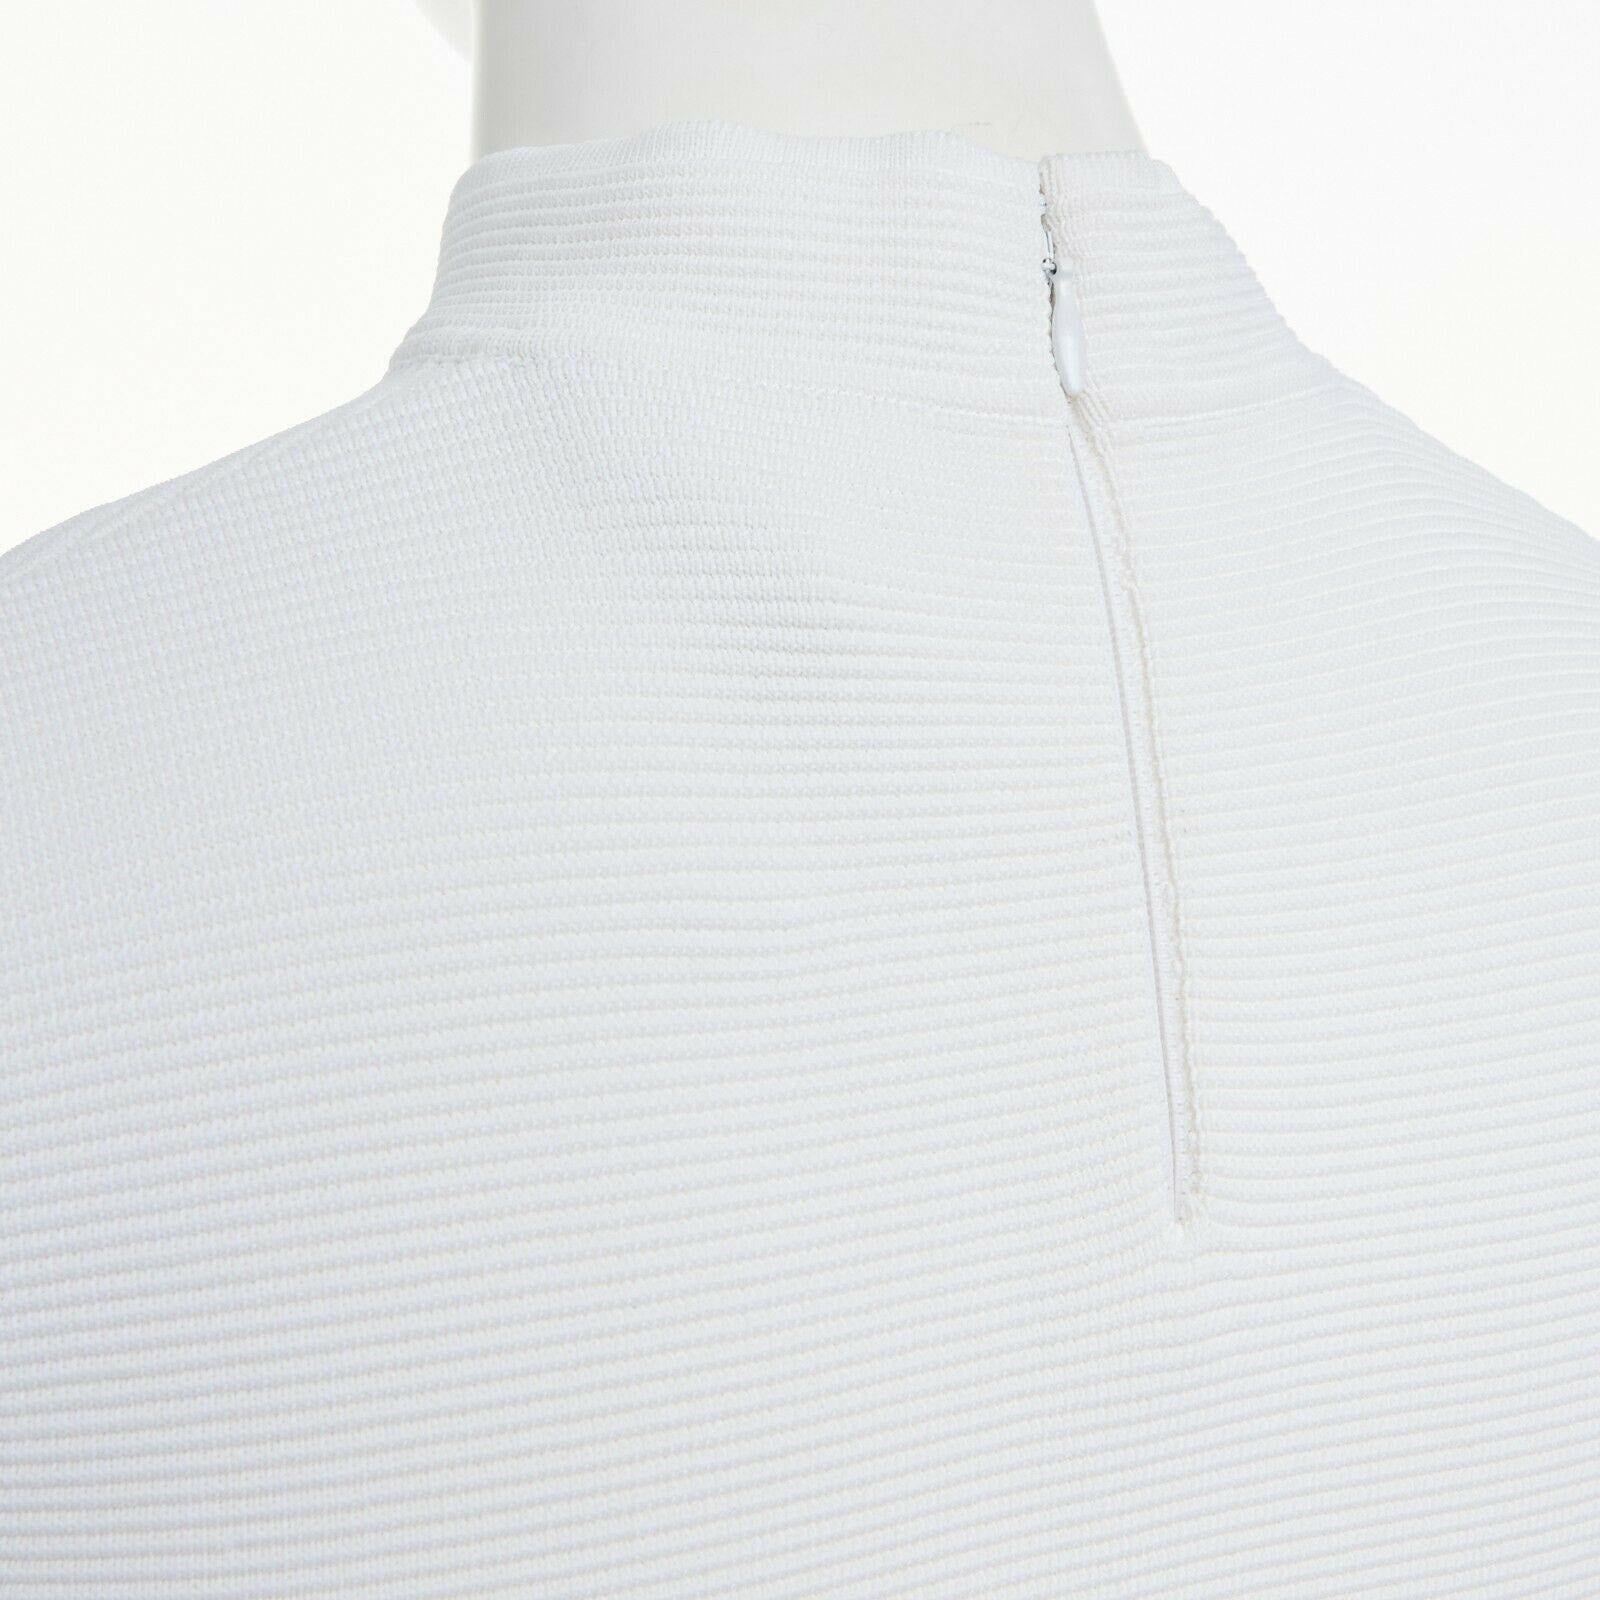 RALPH LAUREN PURPLE COLLECTION white textured knit mock collar vest top S 4